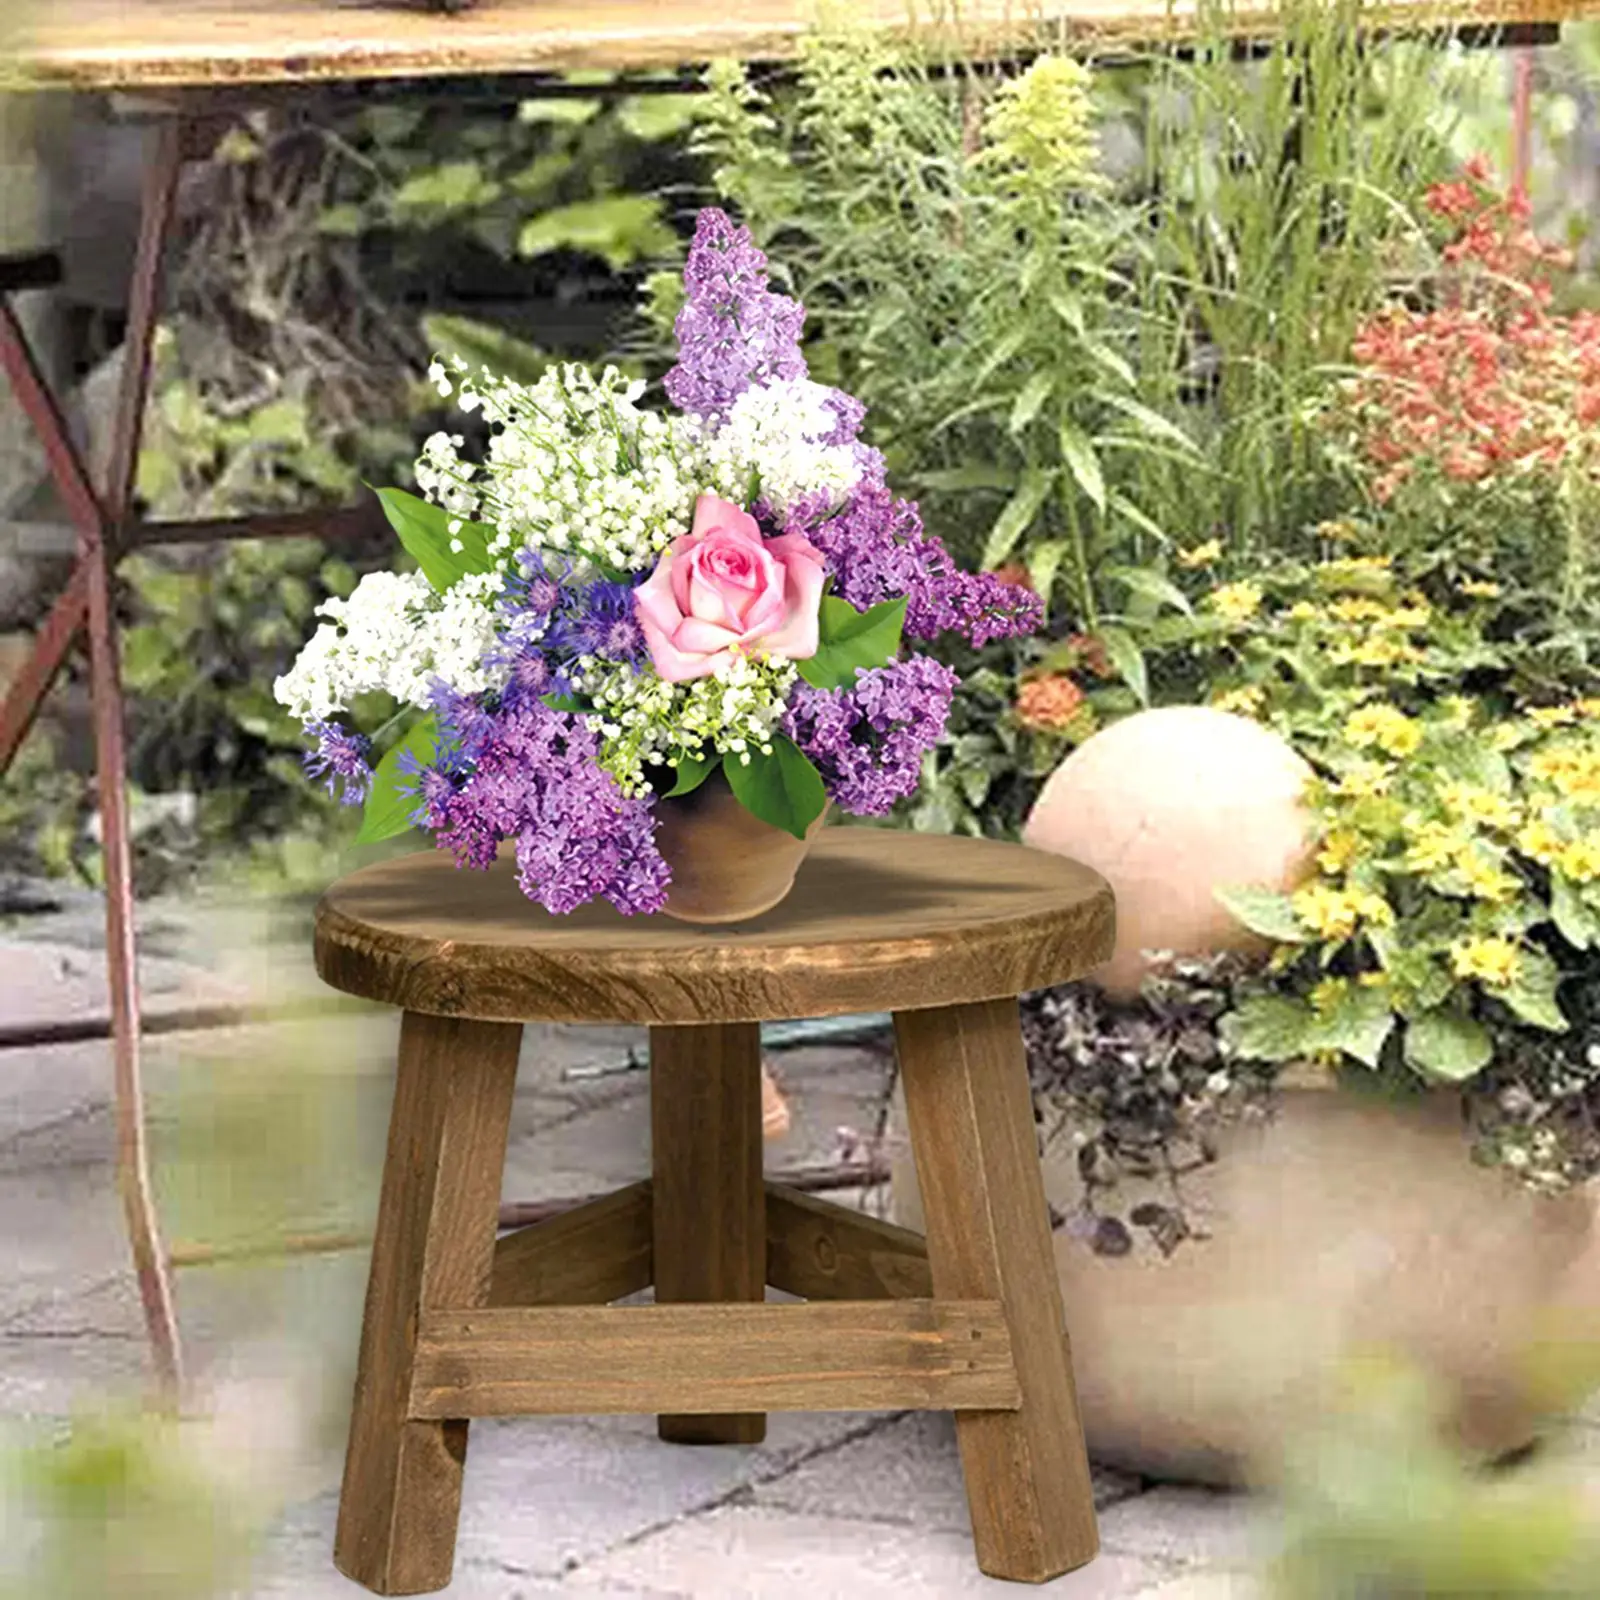 Mini Wooden Stool Plant Stand Round Decorative Flower Pot Stool Planter Holder for Office Garden Desktop Table Indoor Outdoor